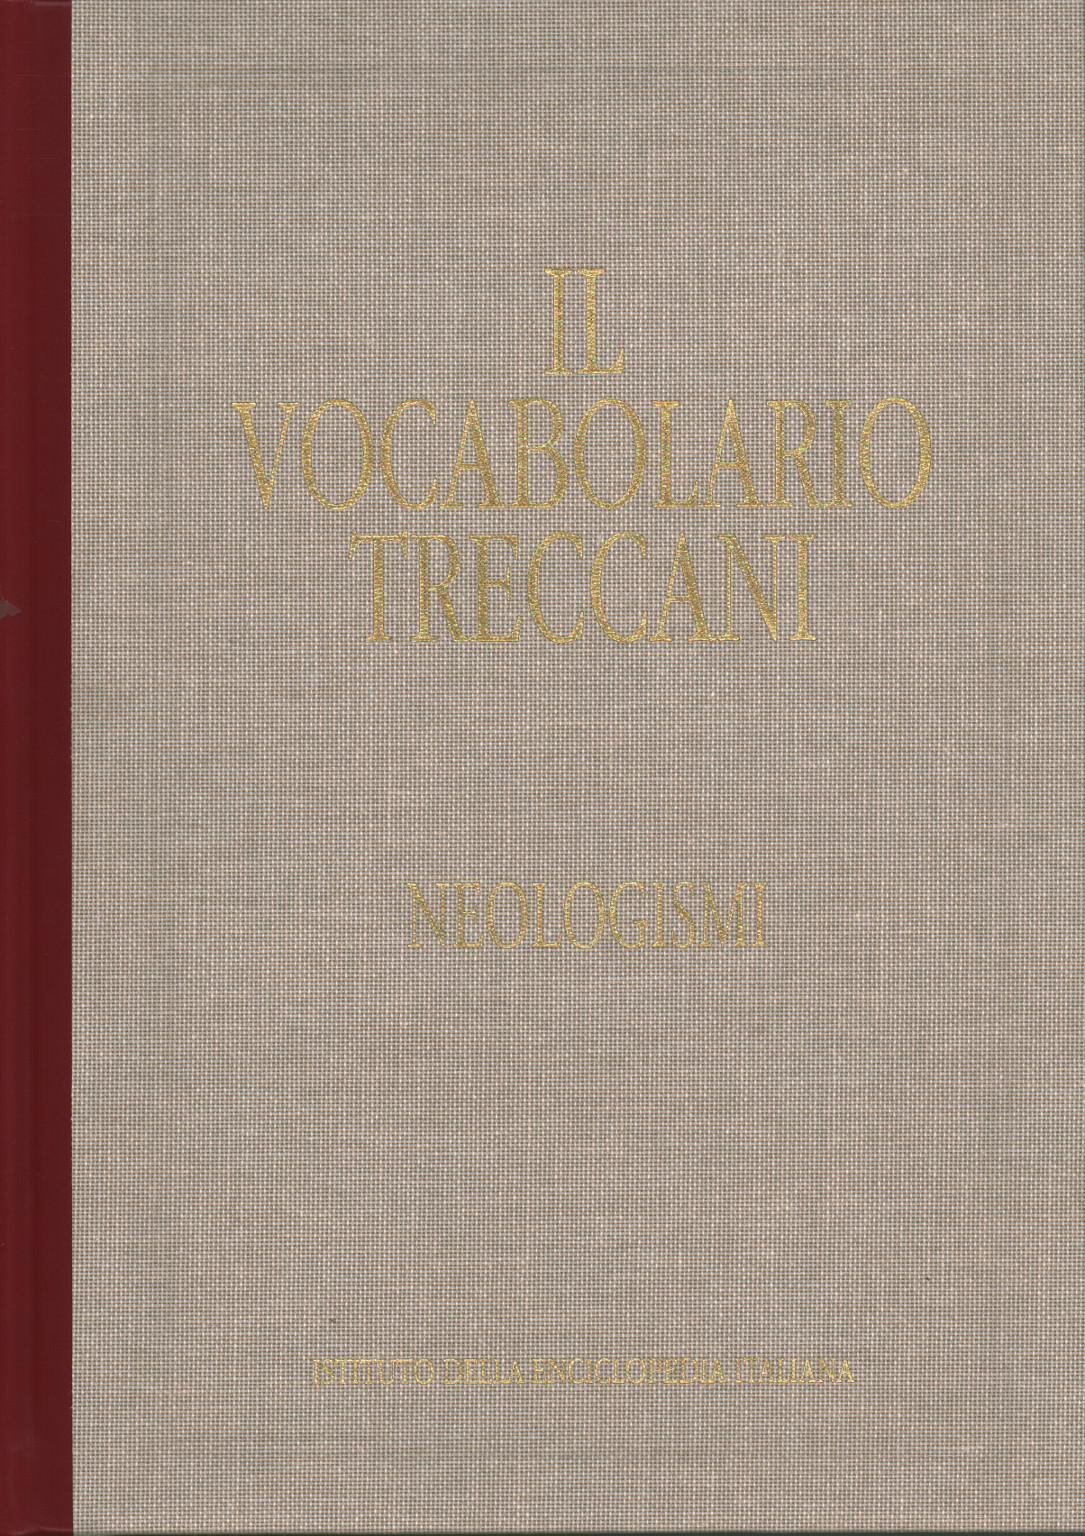 The Treccani vocabulary. Neologisms. Word